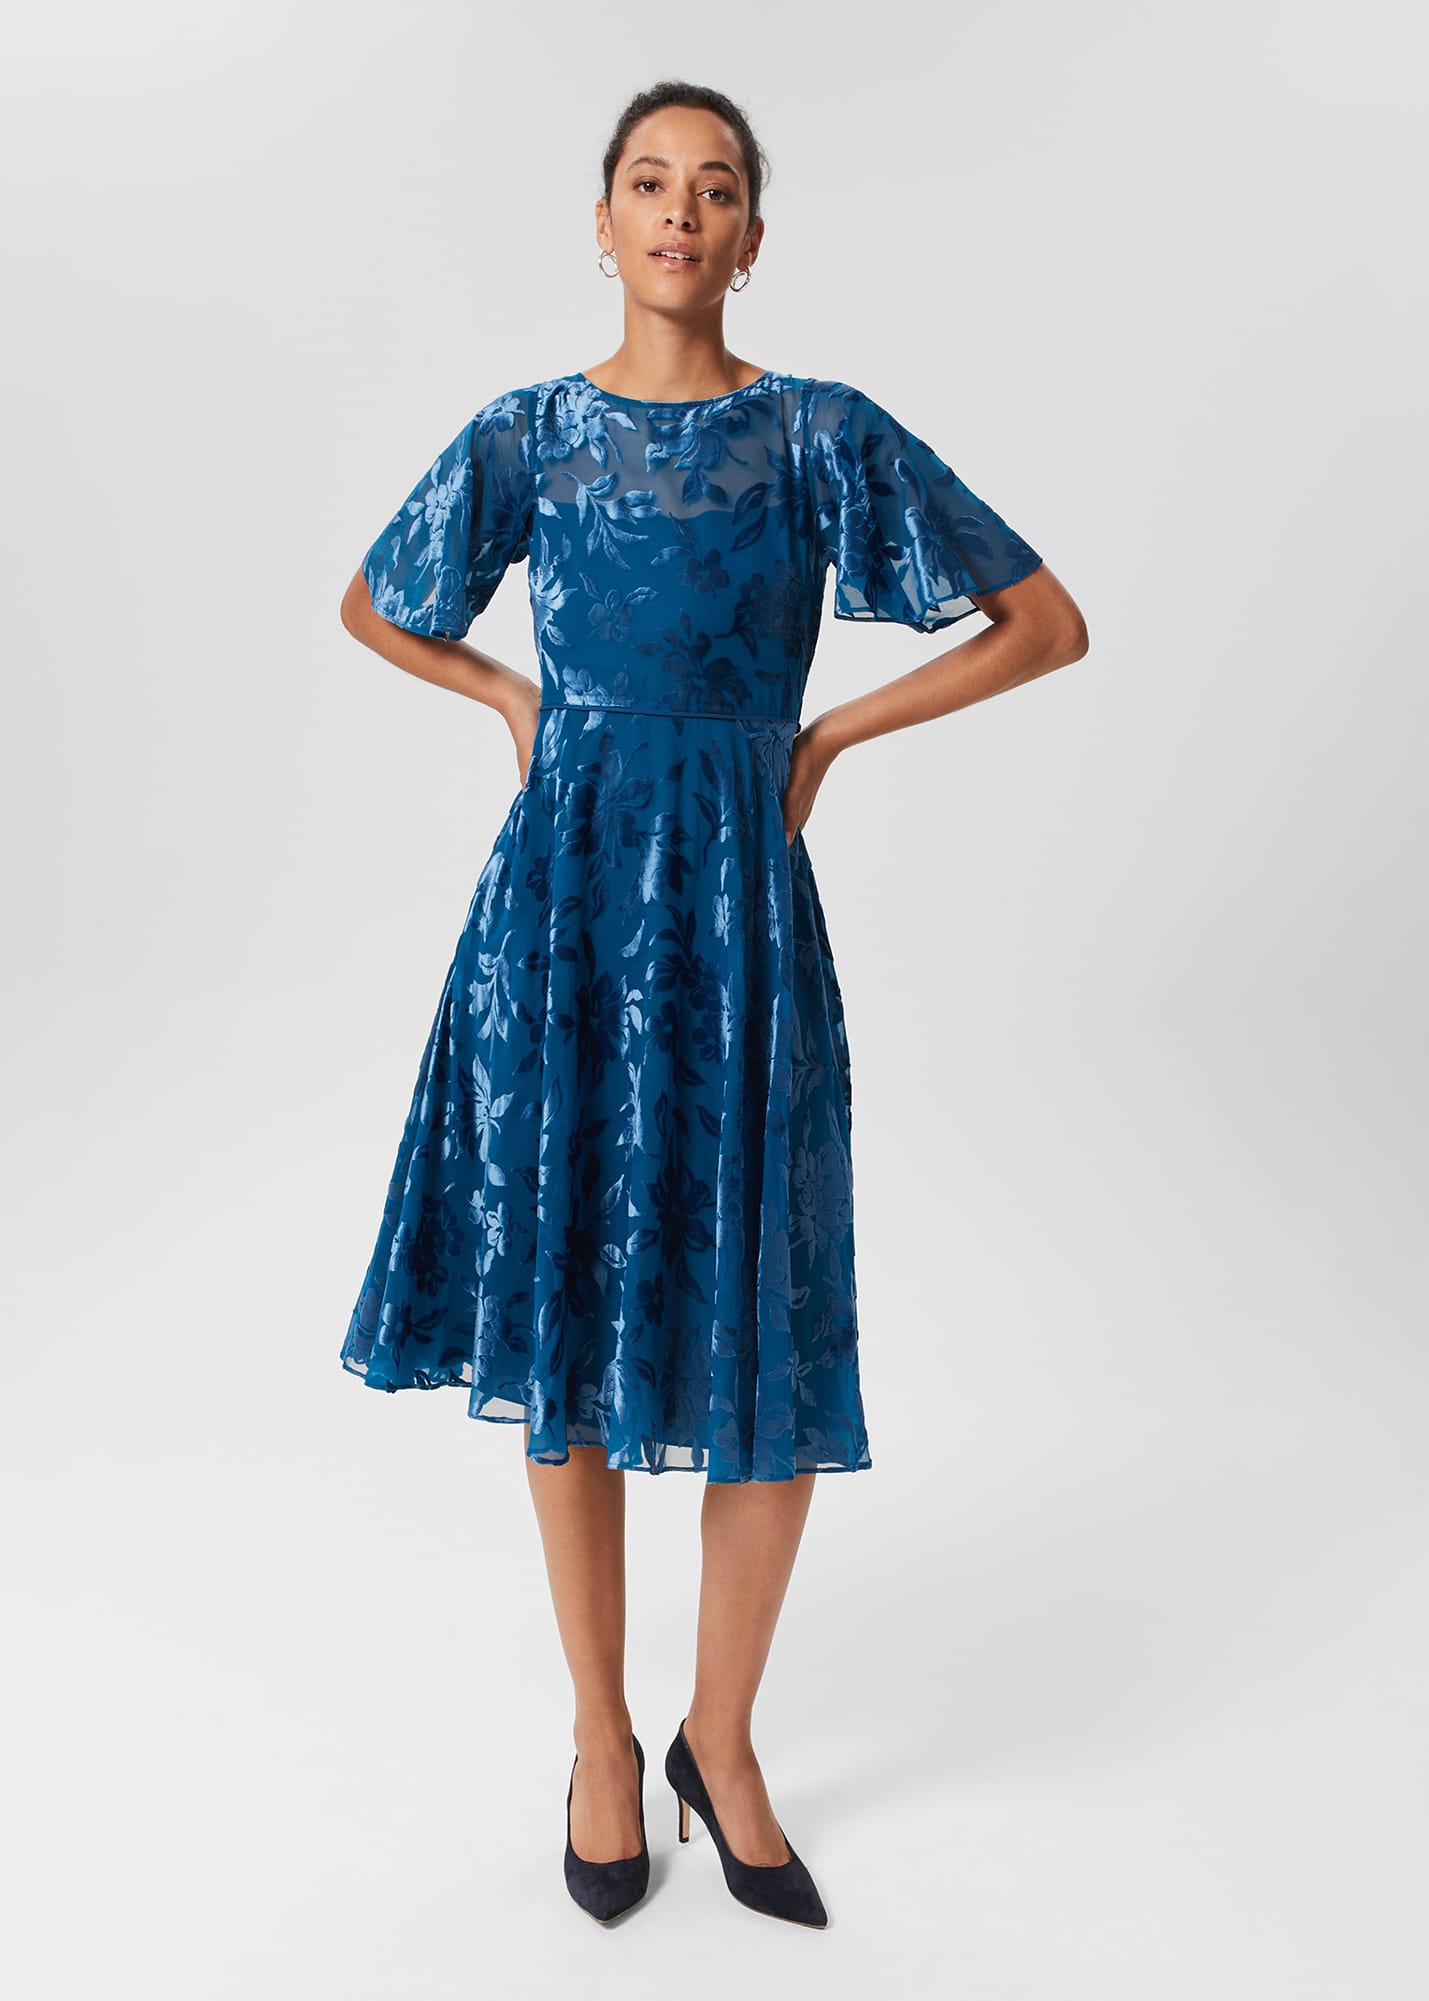 Hobbs Women's Eleanor Devore Fit And Flare Dress - Peacock Blue